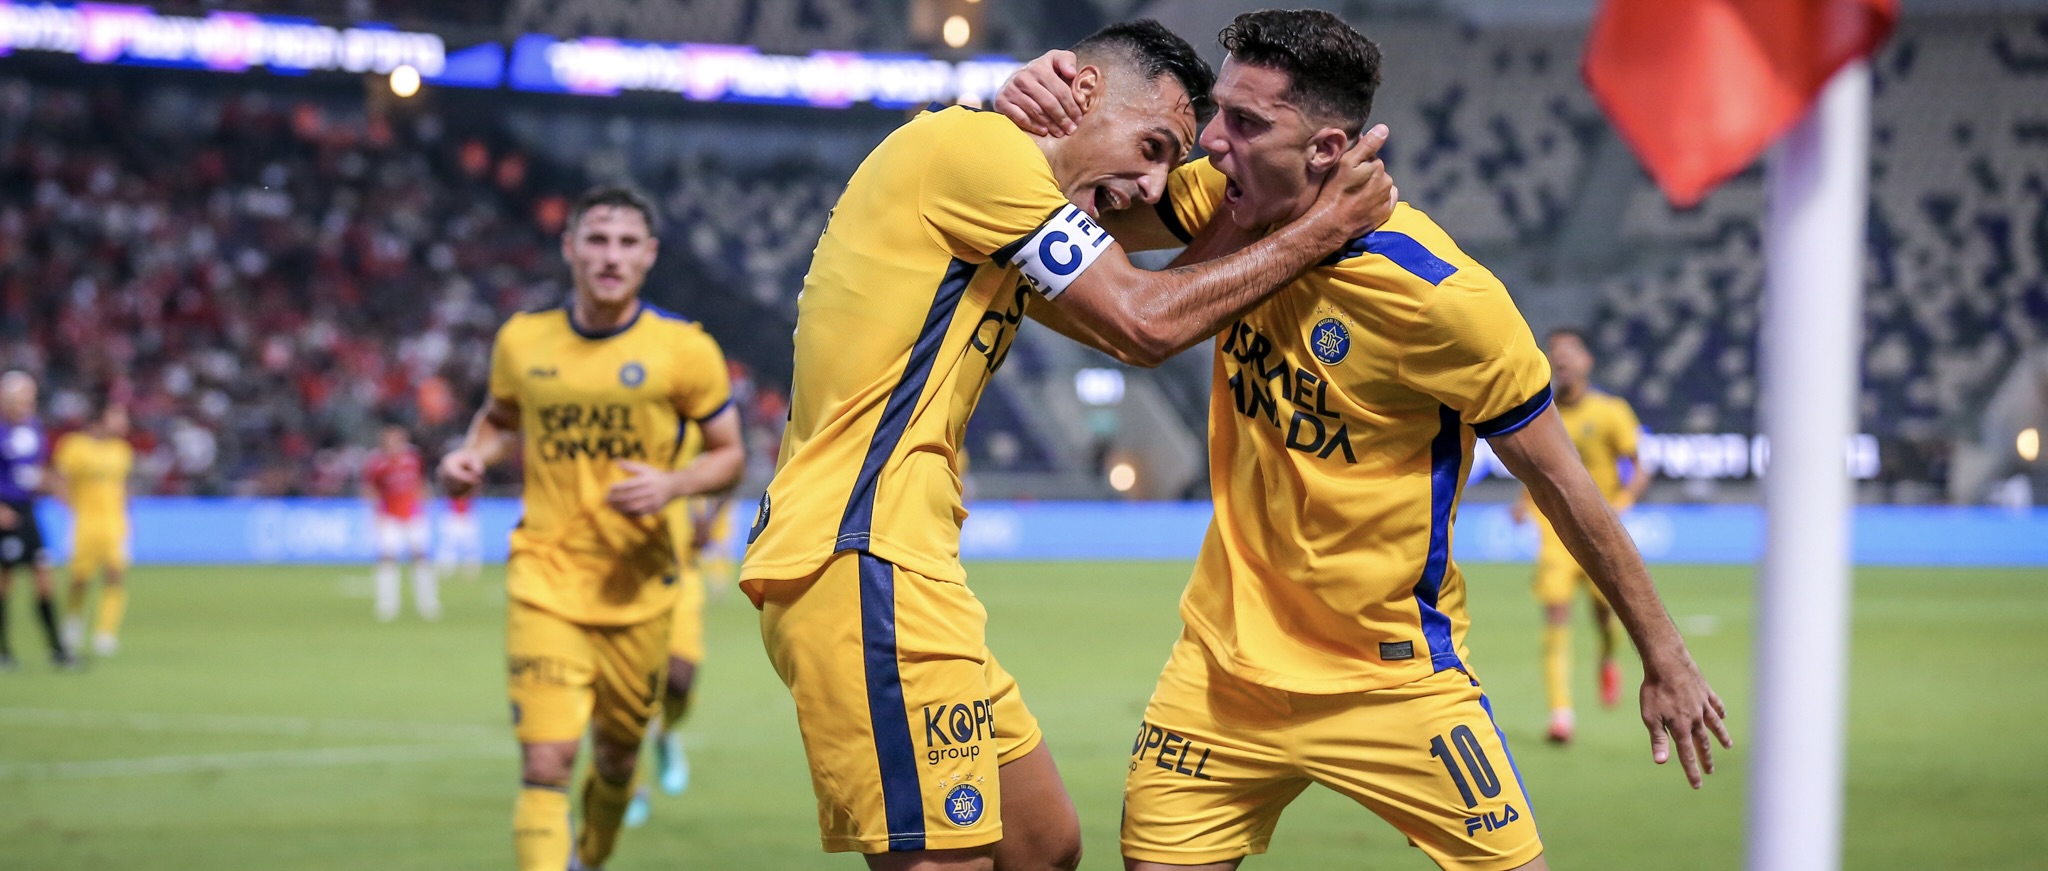 Maccabi paints Tel Aviv Yellow & Blue after derby drubbing of Hapoel